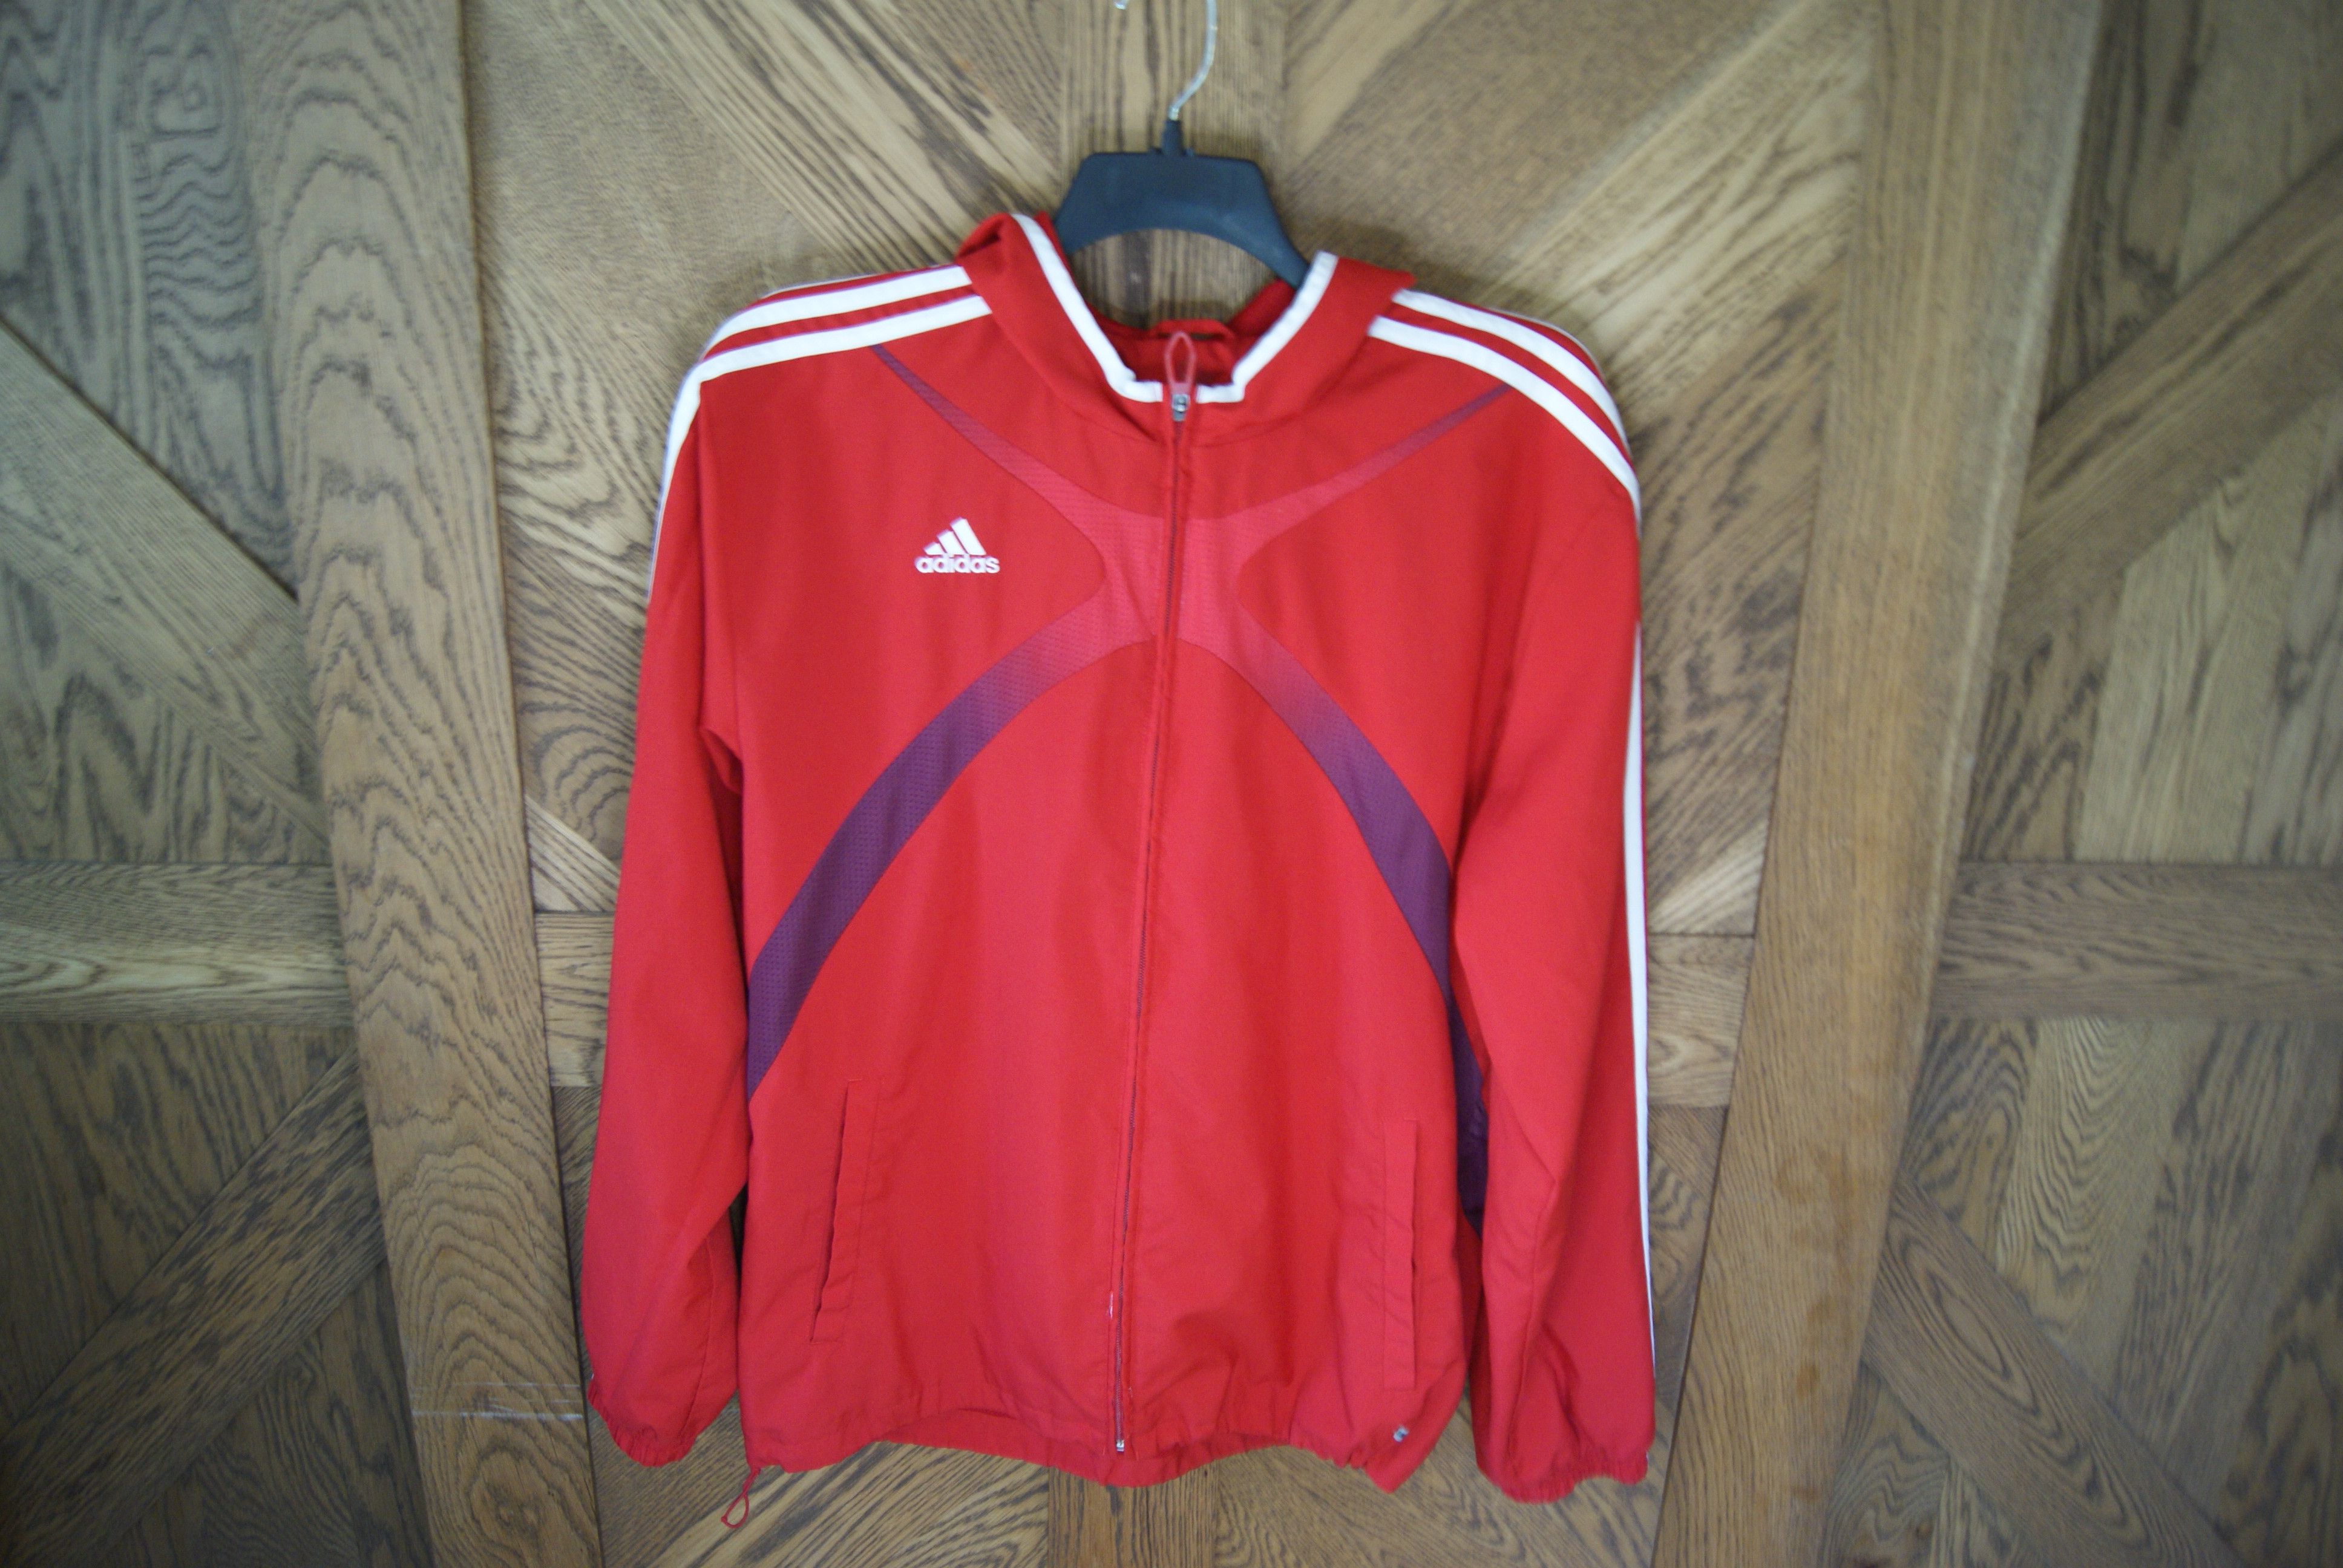 Adidas Vintage Adidas Soccer Jacket Size US XL / EU 56 / 4 - 1 Preview